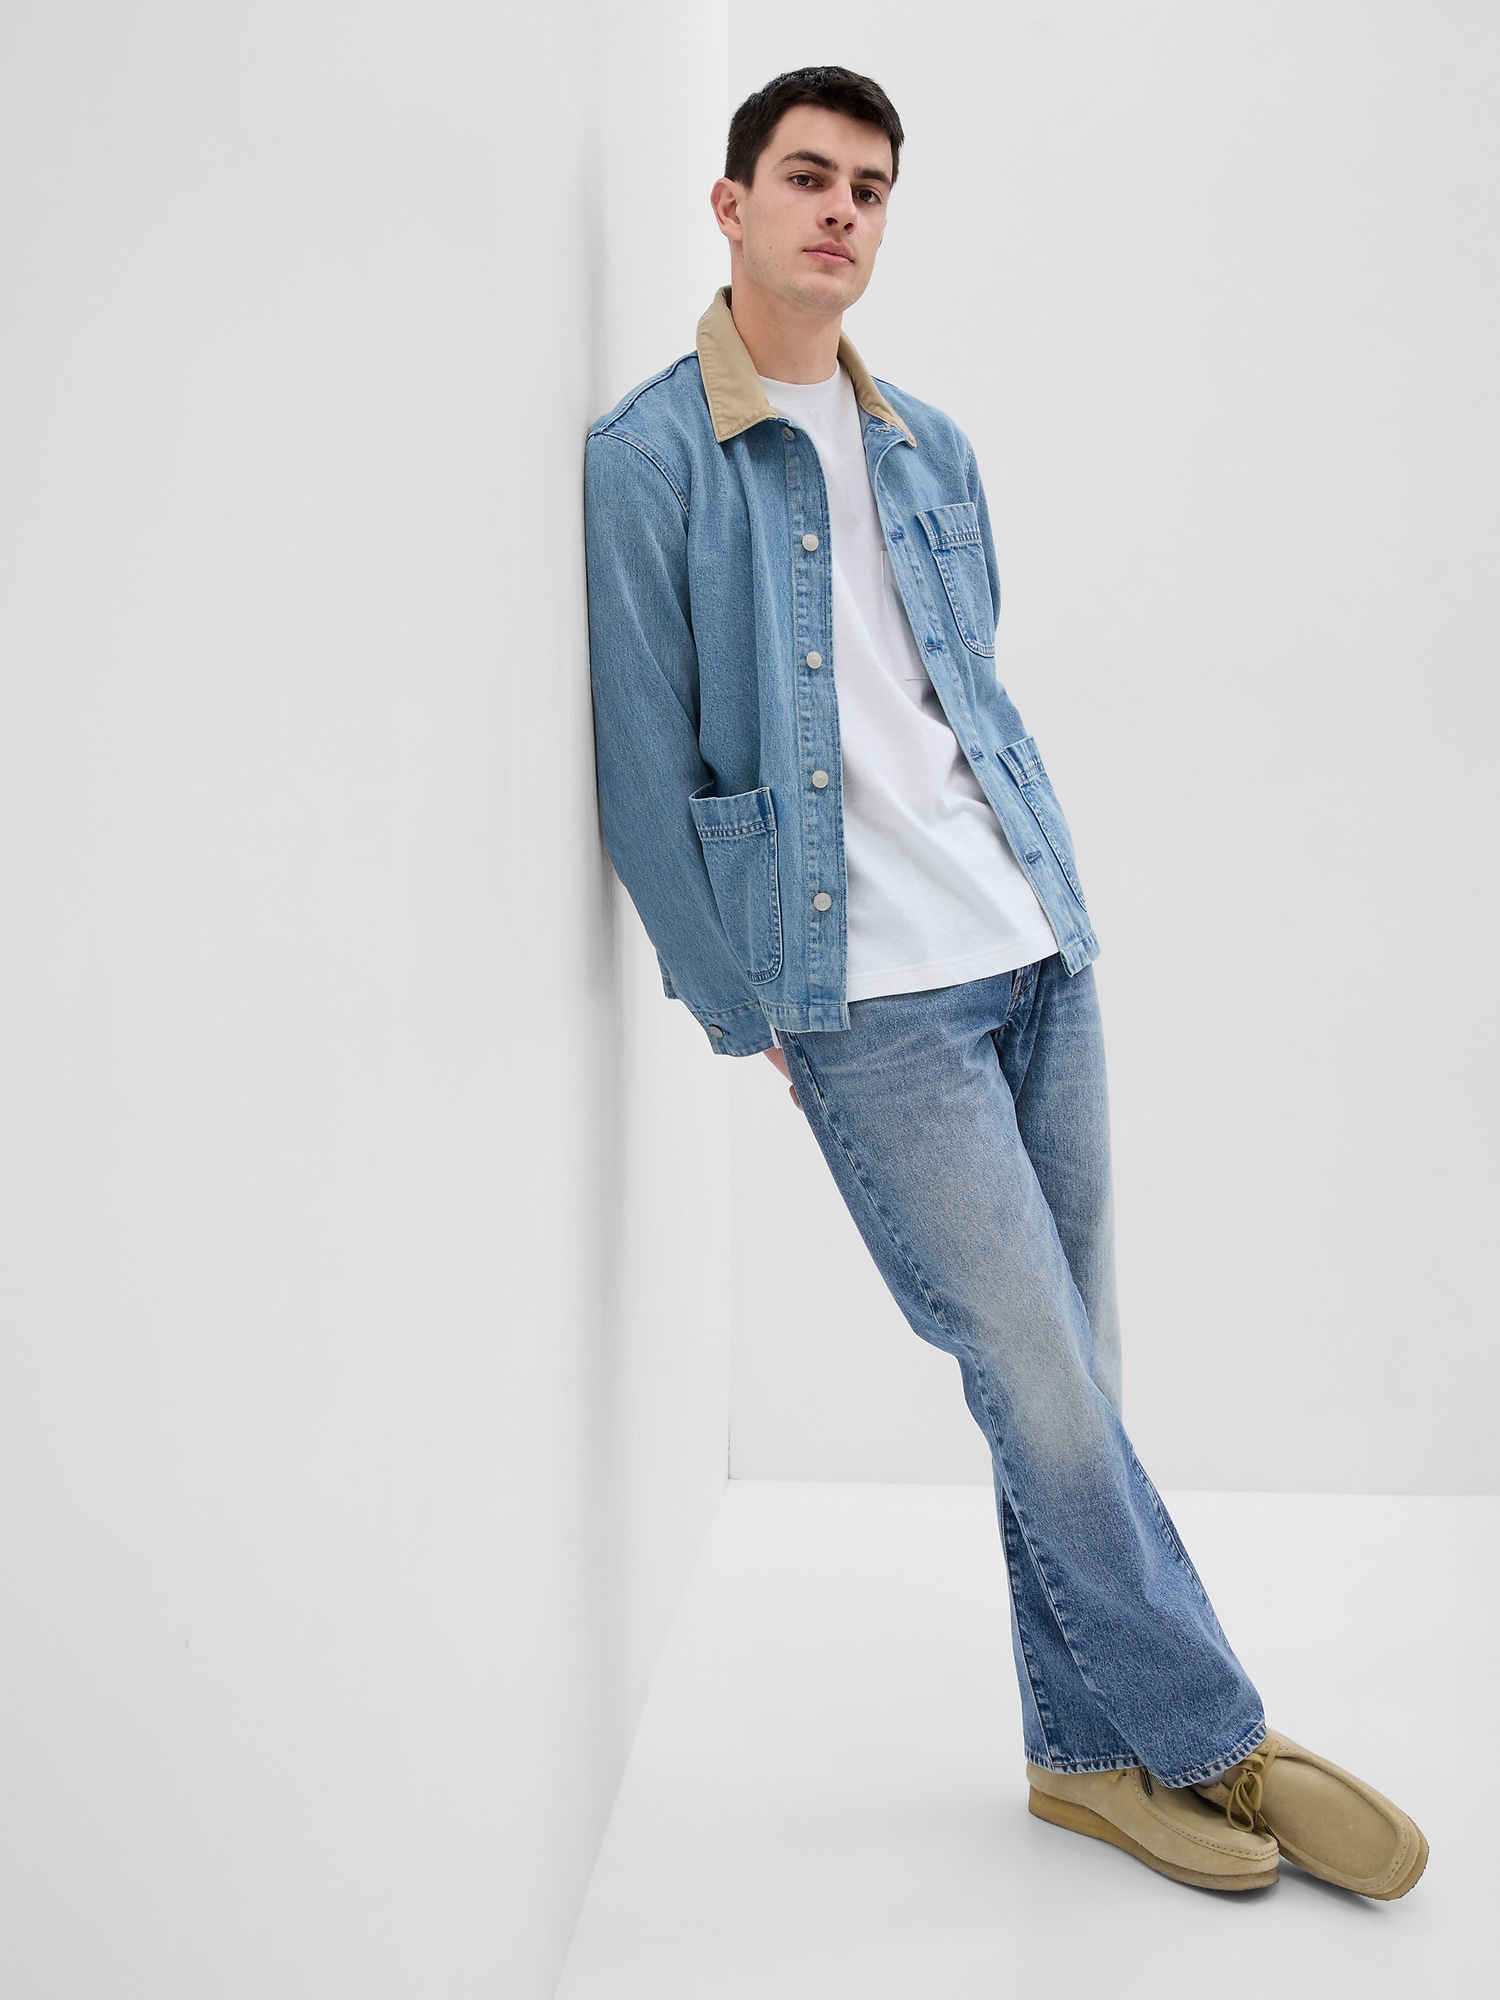 Gap Long & Lean bootcut jeans 16 33R